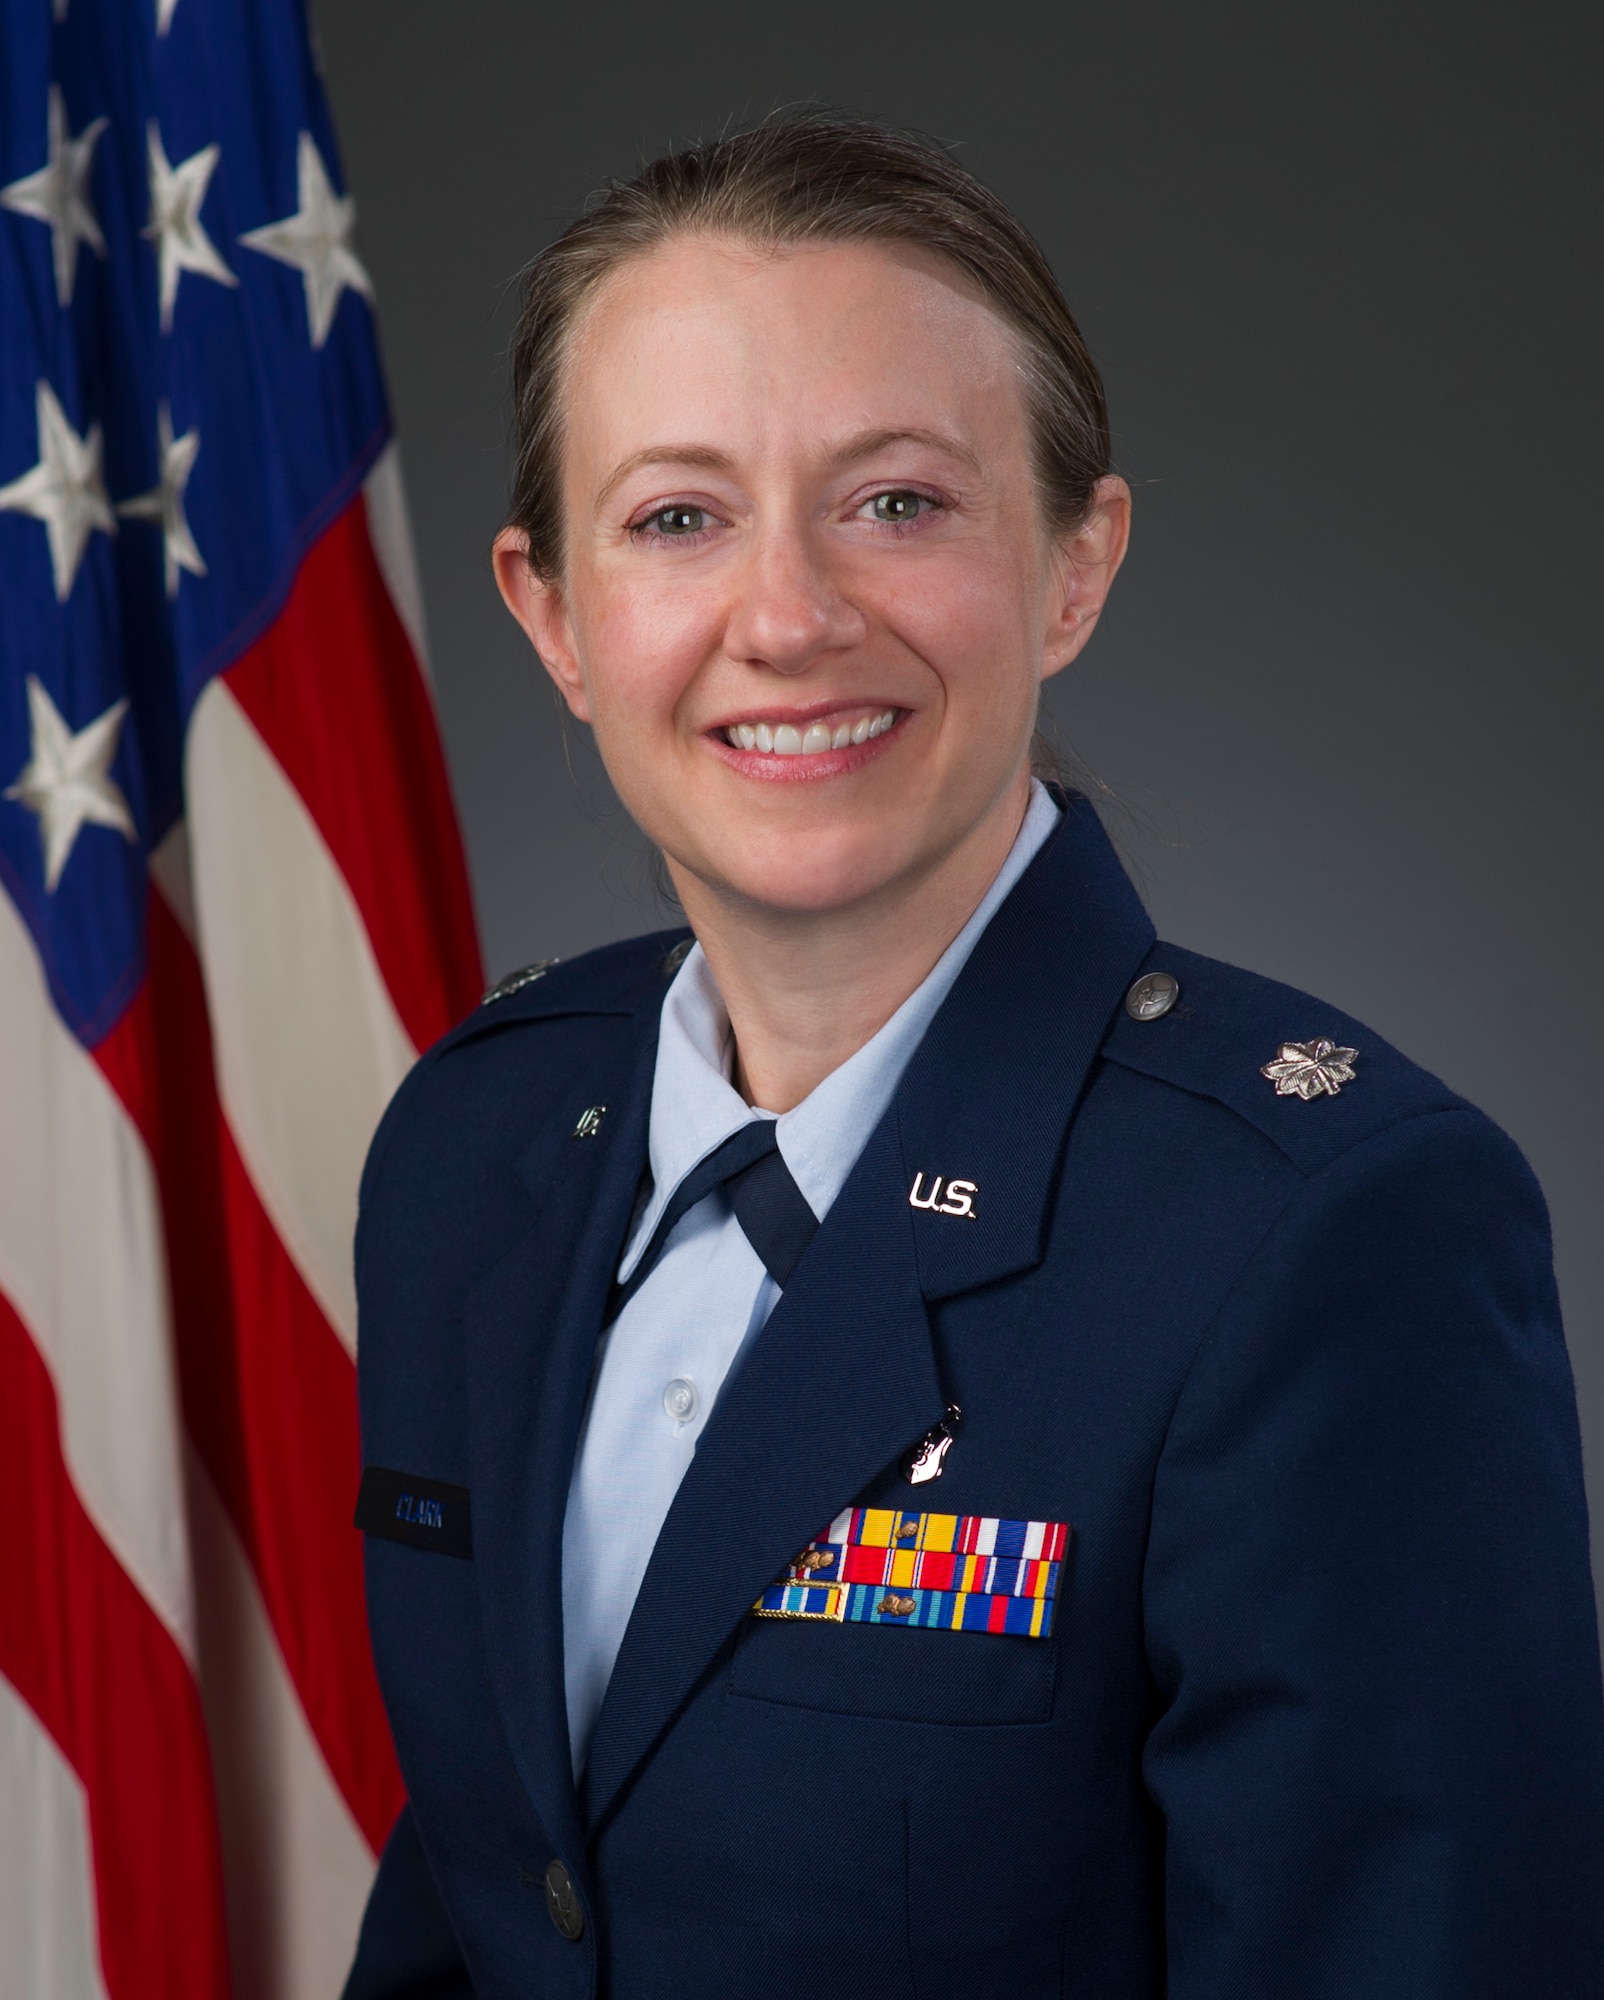 Lt. Col. Heidi Clark, official photo, U.S. Air Force